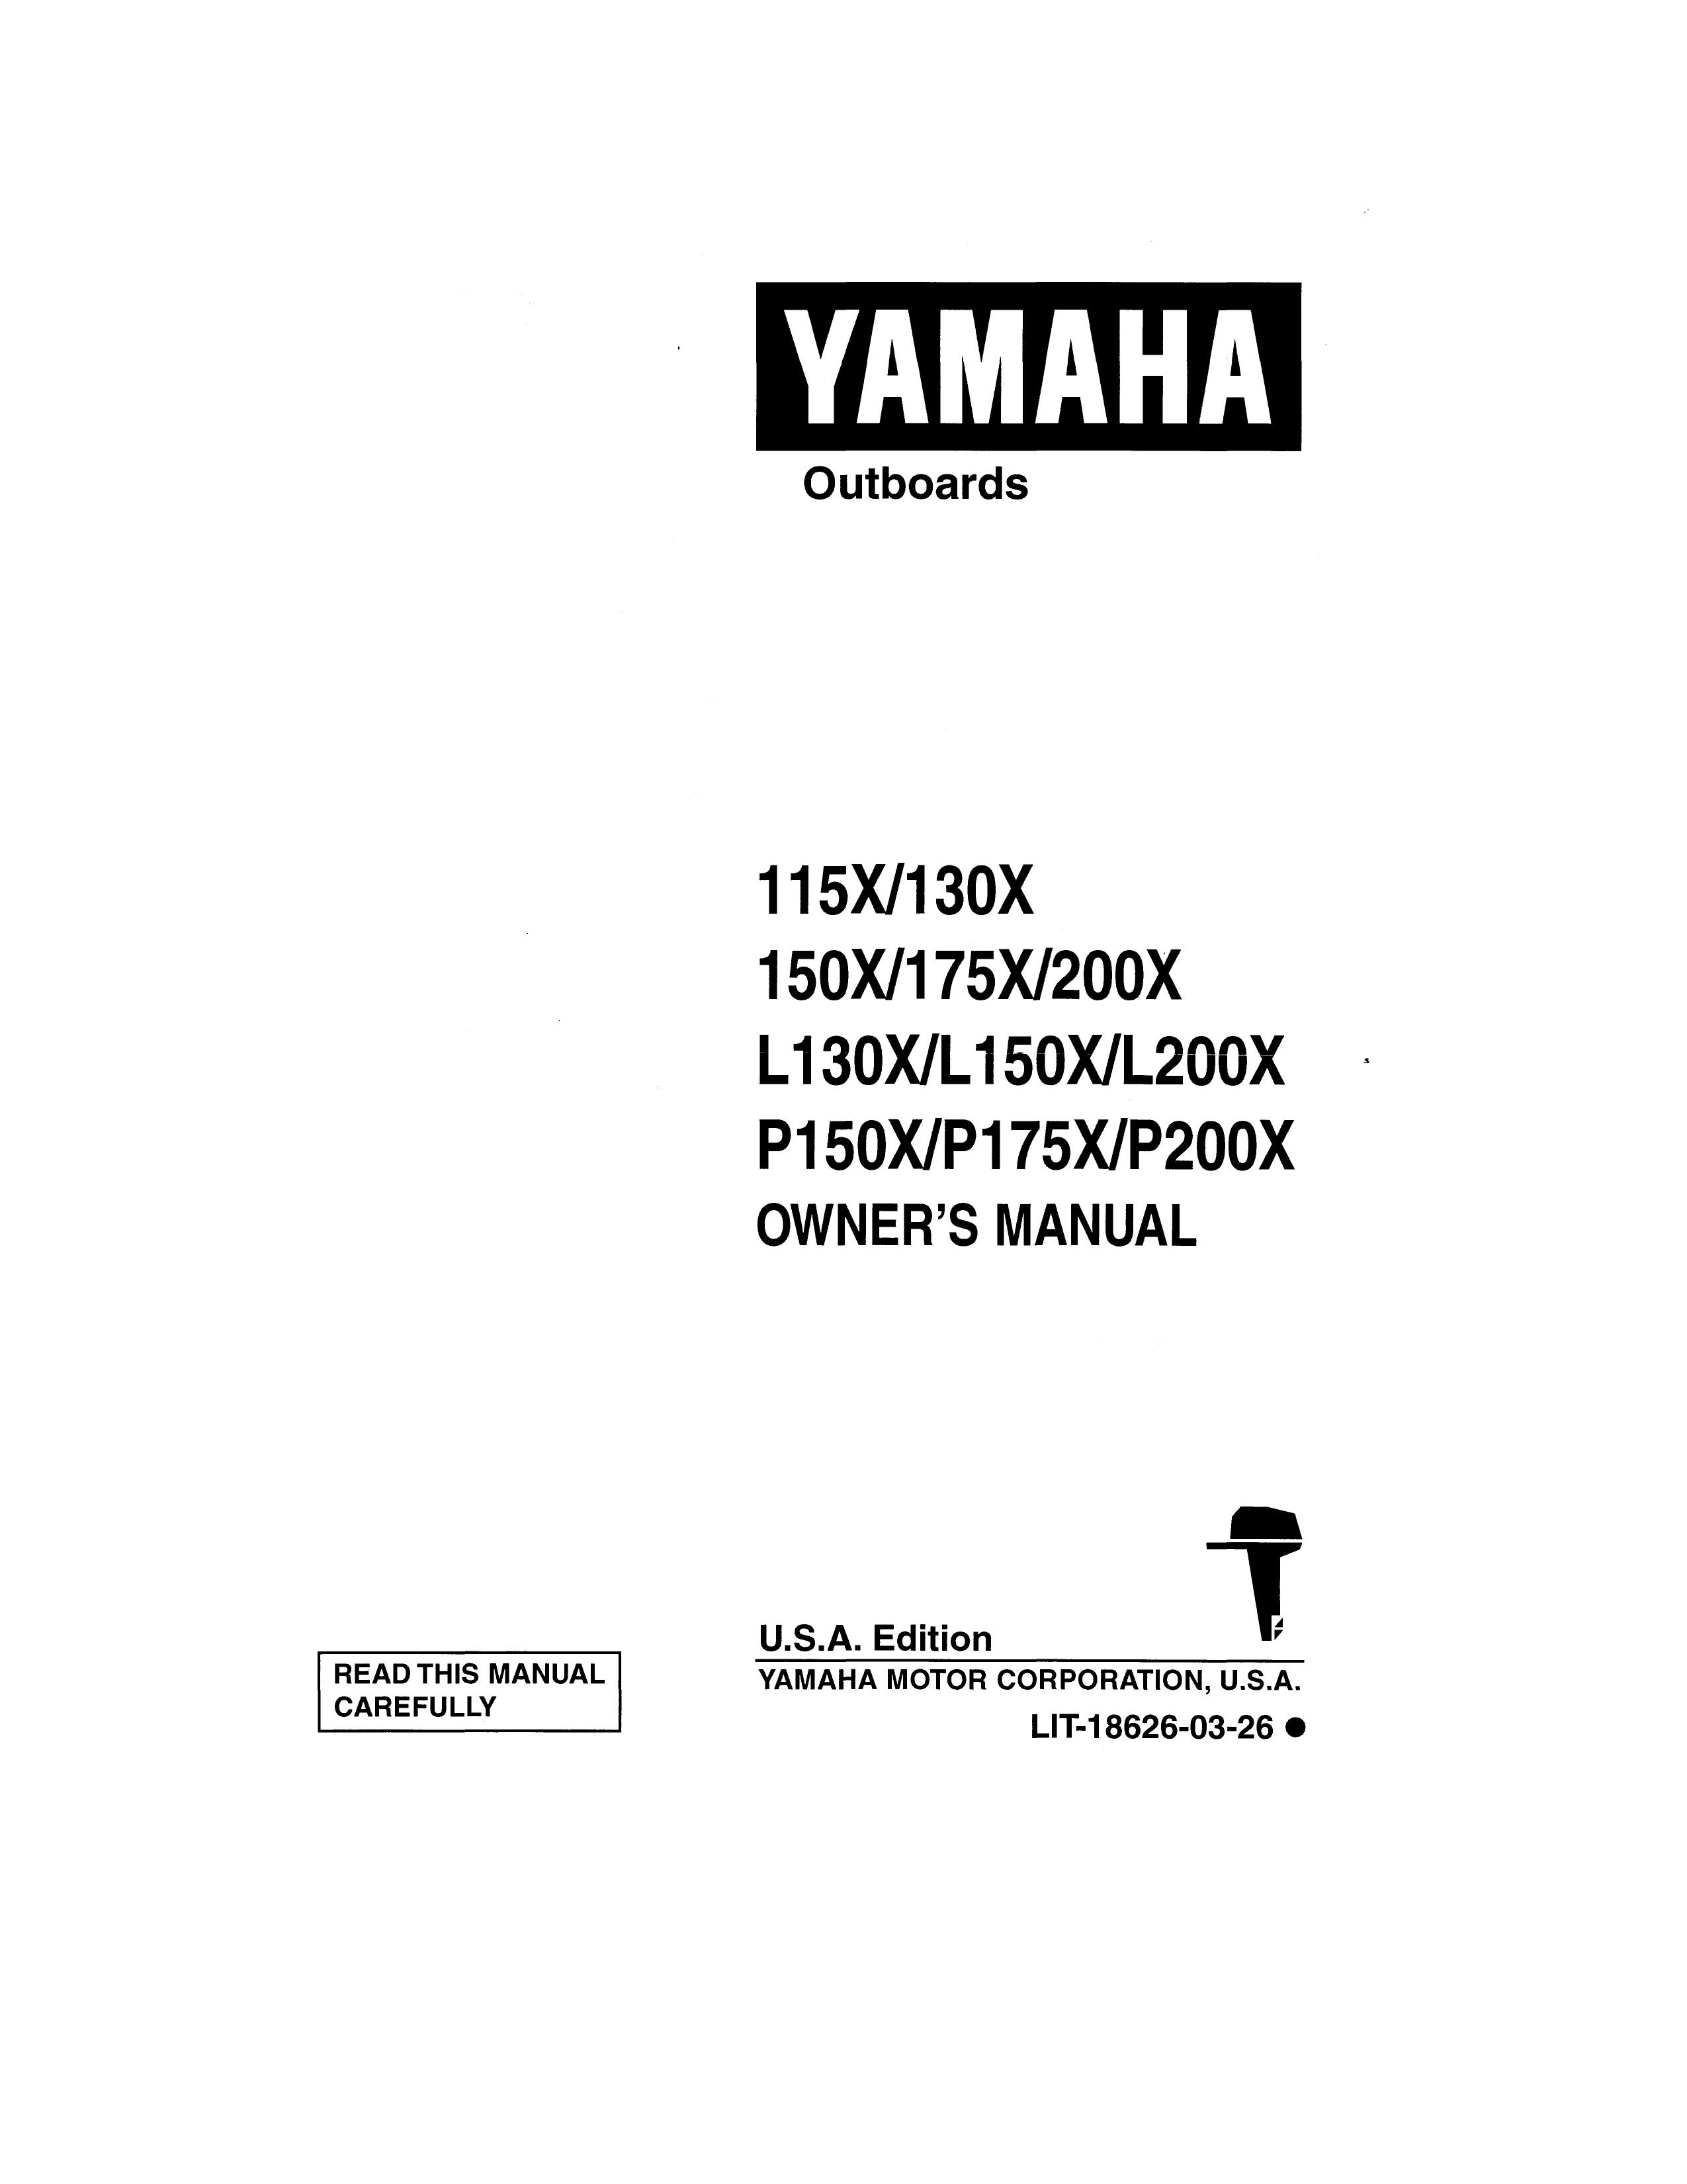 Yamaha L130X Outboard Motor User Manual